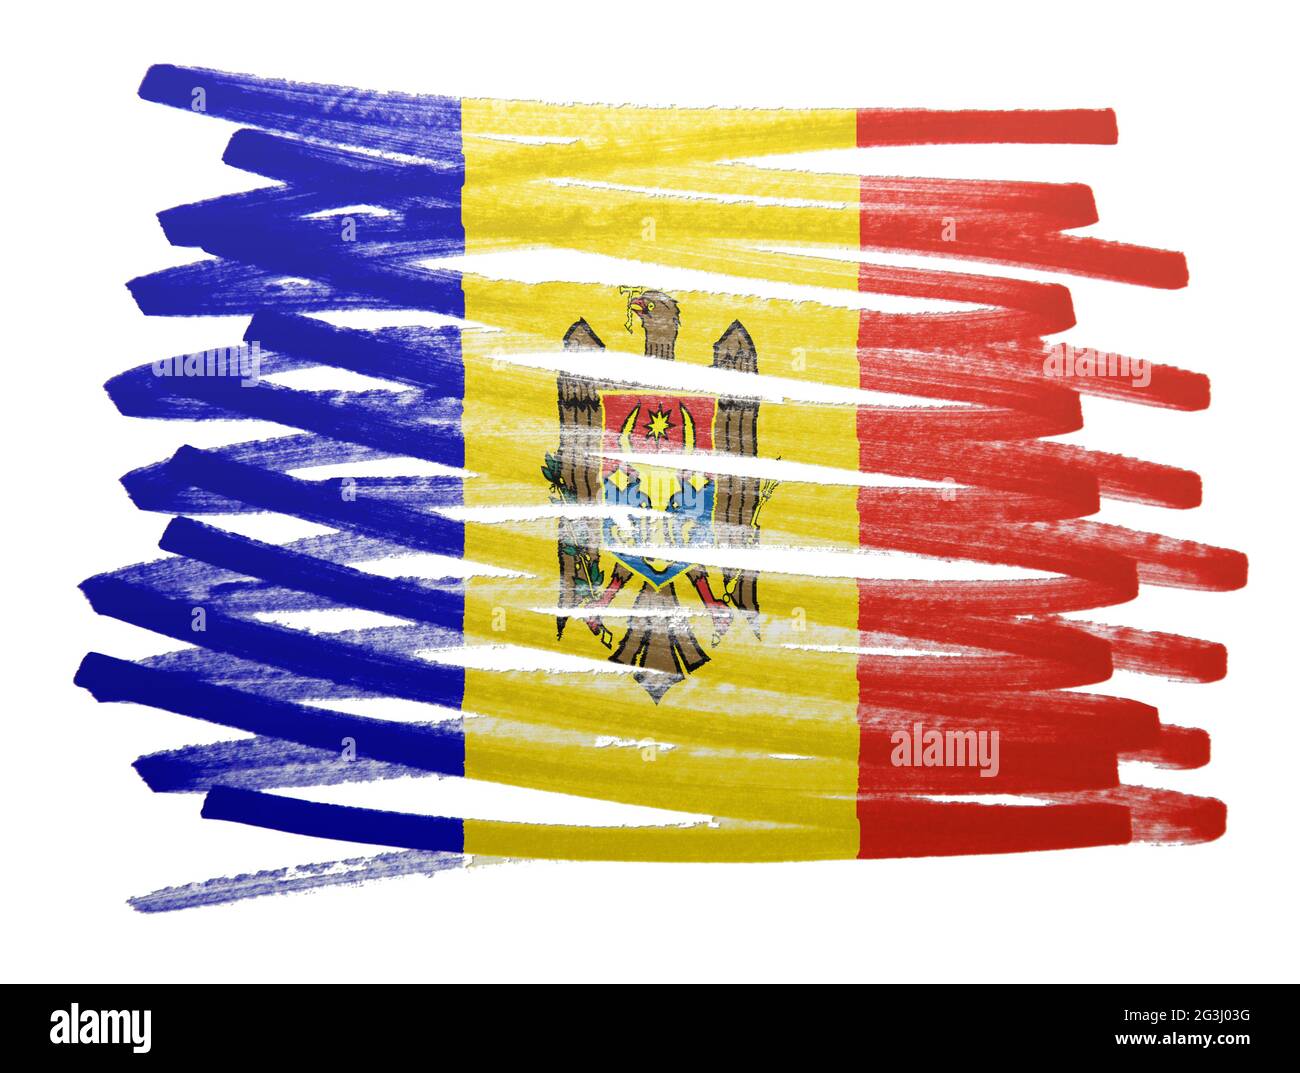 Flag illustration - Moldova Stock Photo